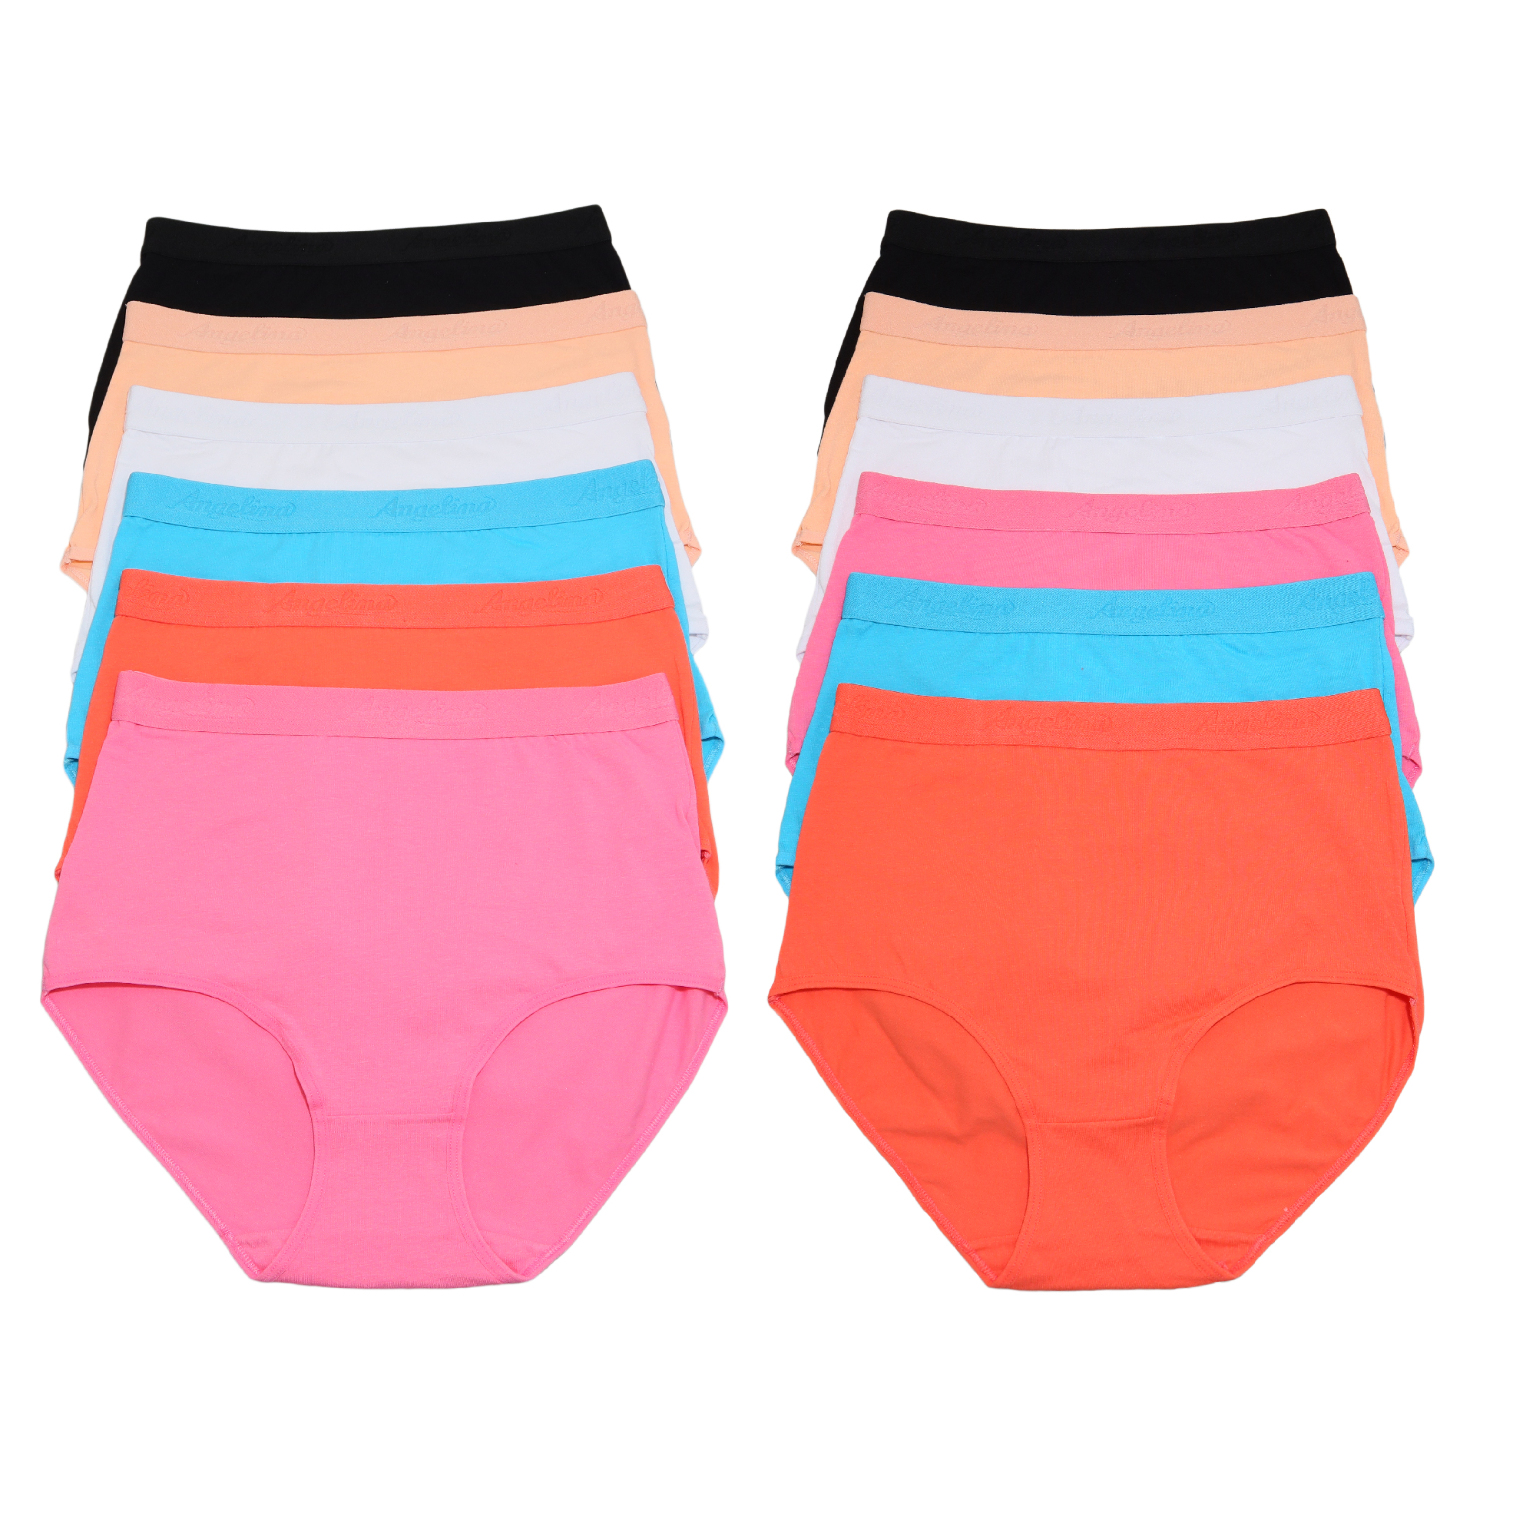 Bulk Women's Cotton Panties in S-XL in Bright Colors